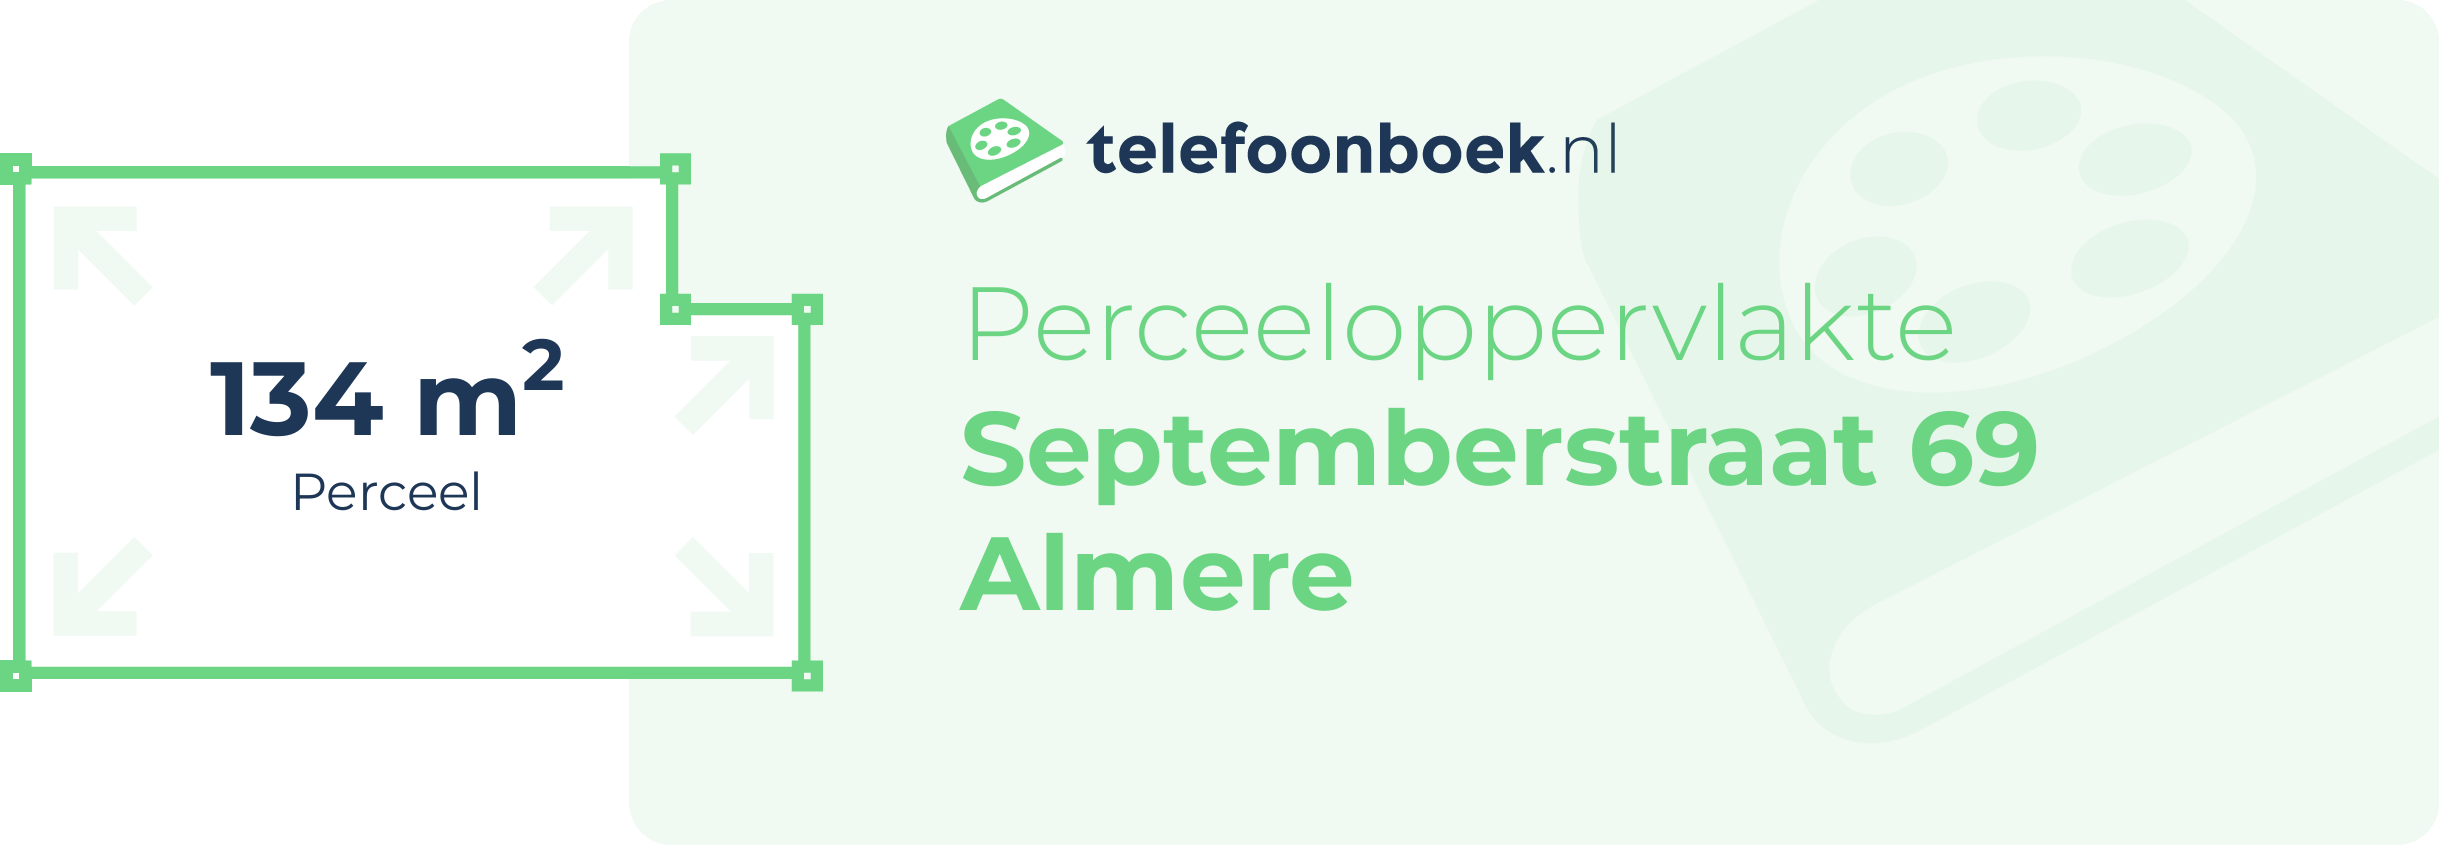 Perceeloppervlakte Septemberstraat 69 Almere